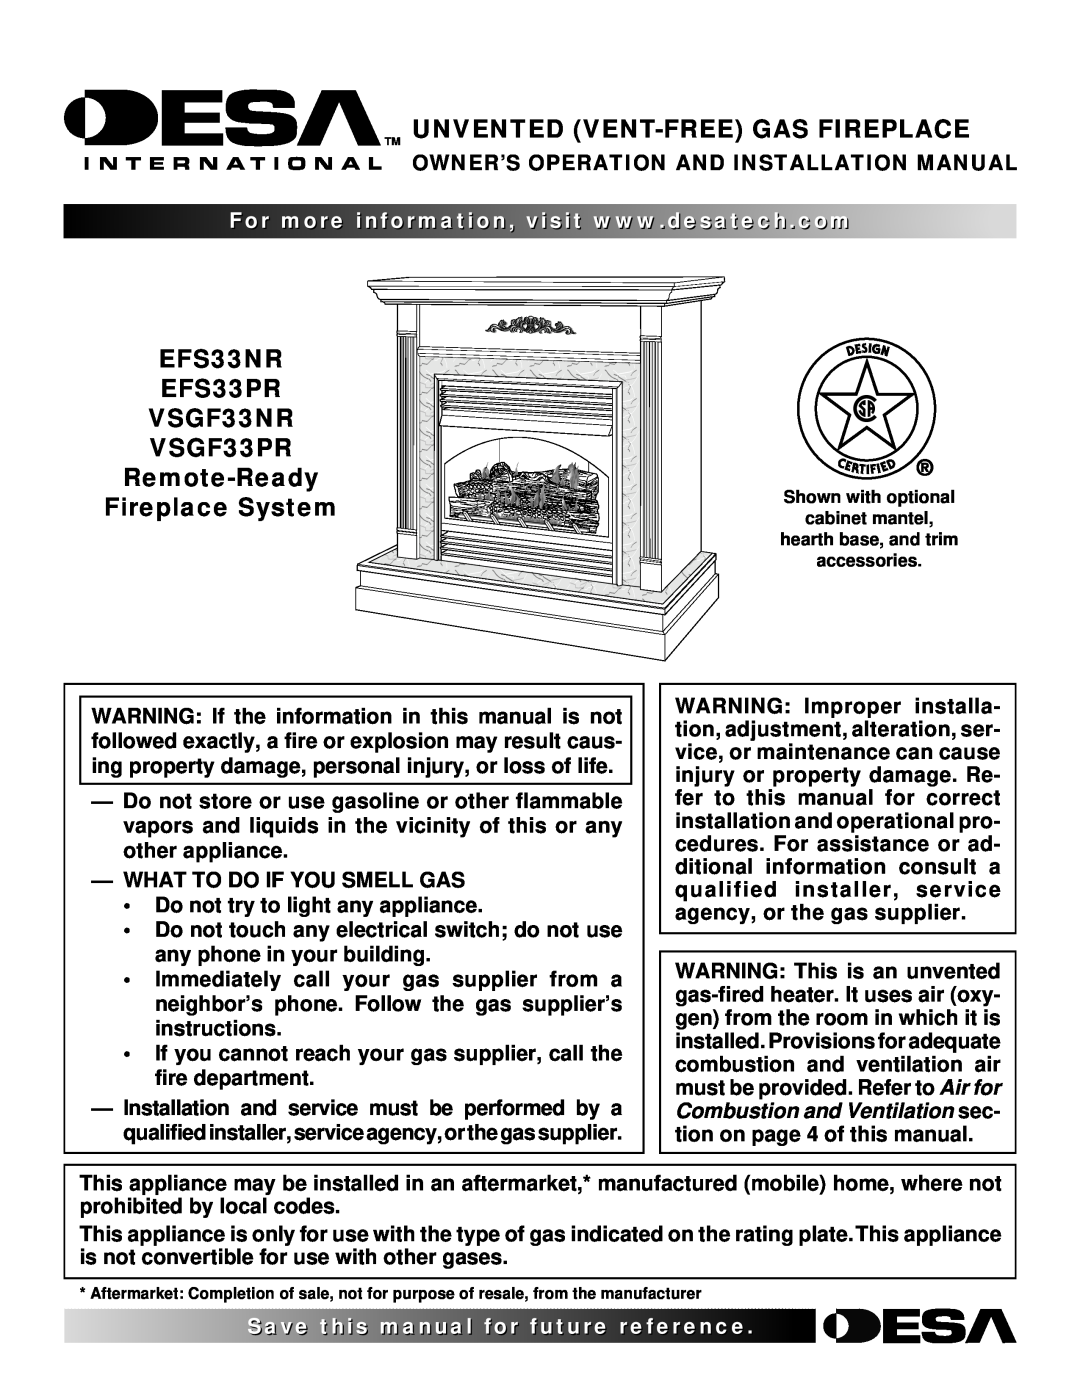 Desa VSGF33PR installation manual Owner’S Operation And Installation Manual, What To Do If You Smell Gas, Fireplace System 